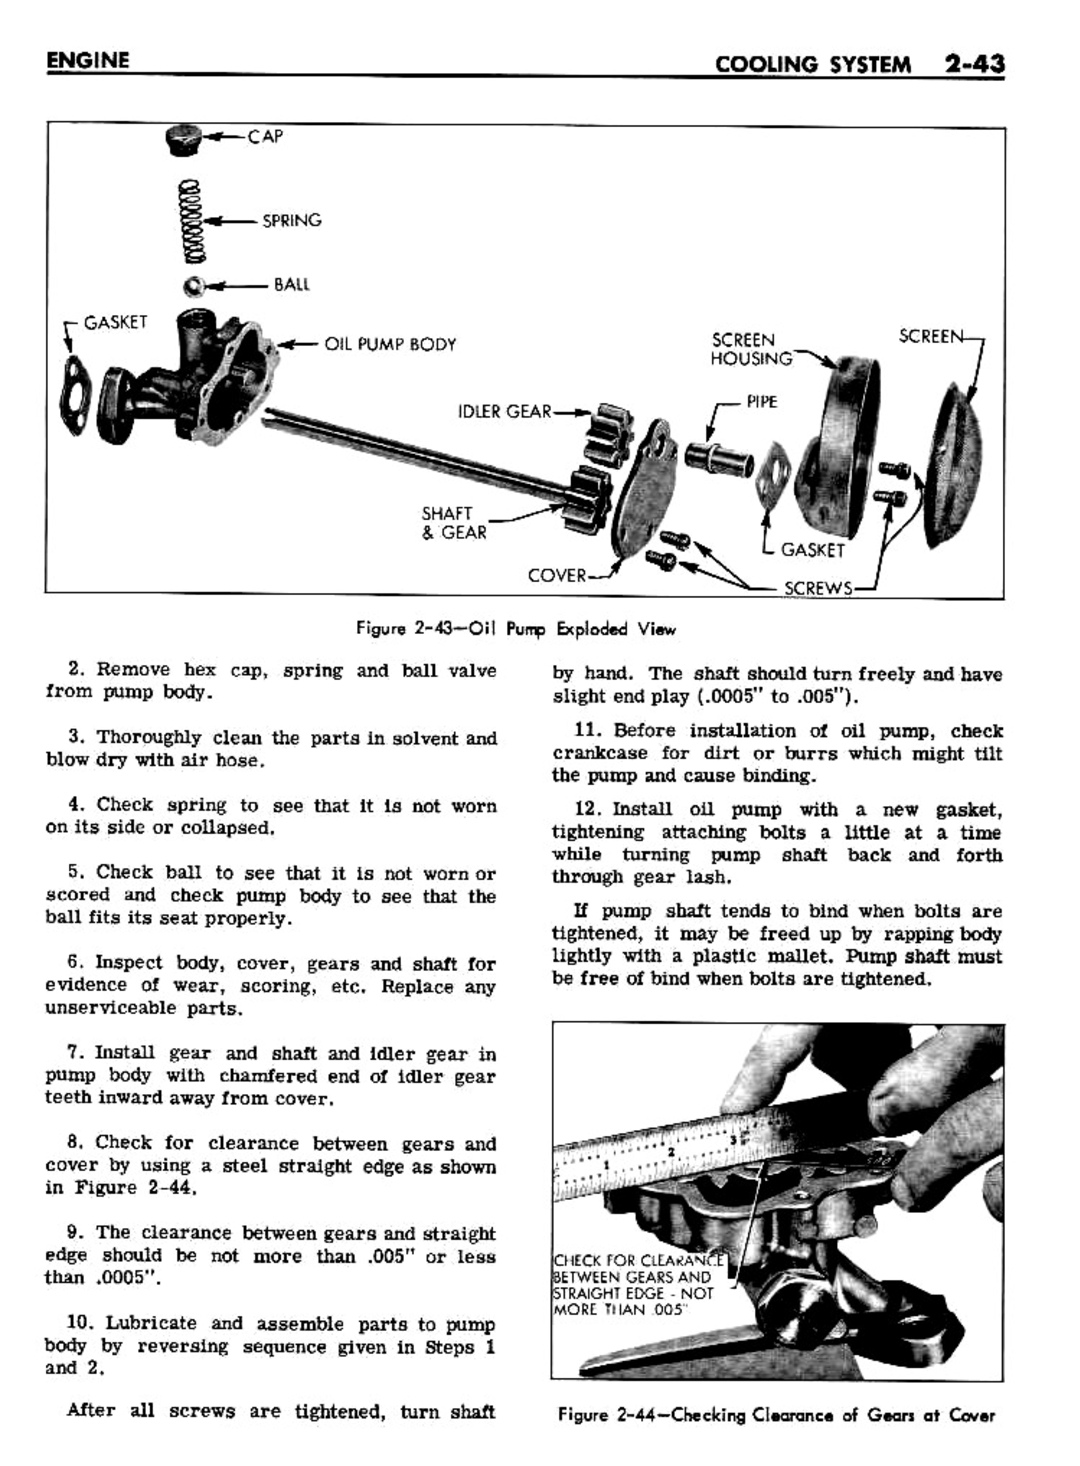 n_03 1961 Buick Shop Manual - Engine-043-043.jpg